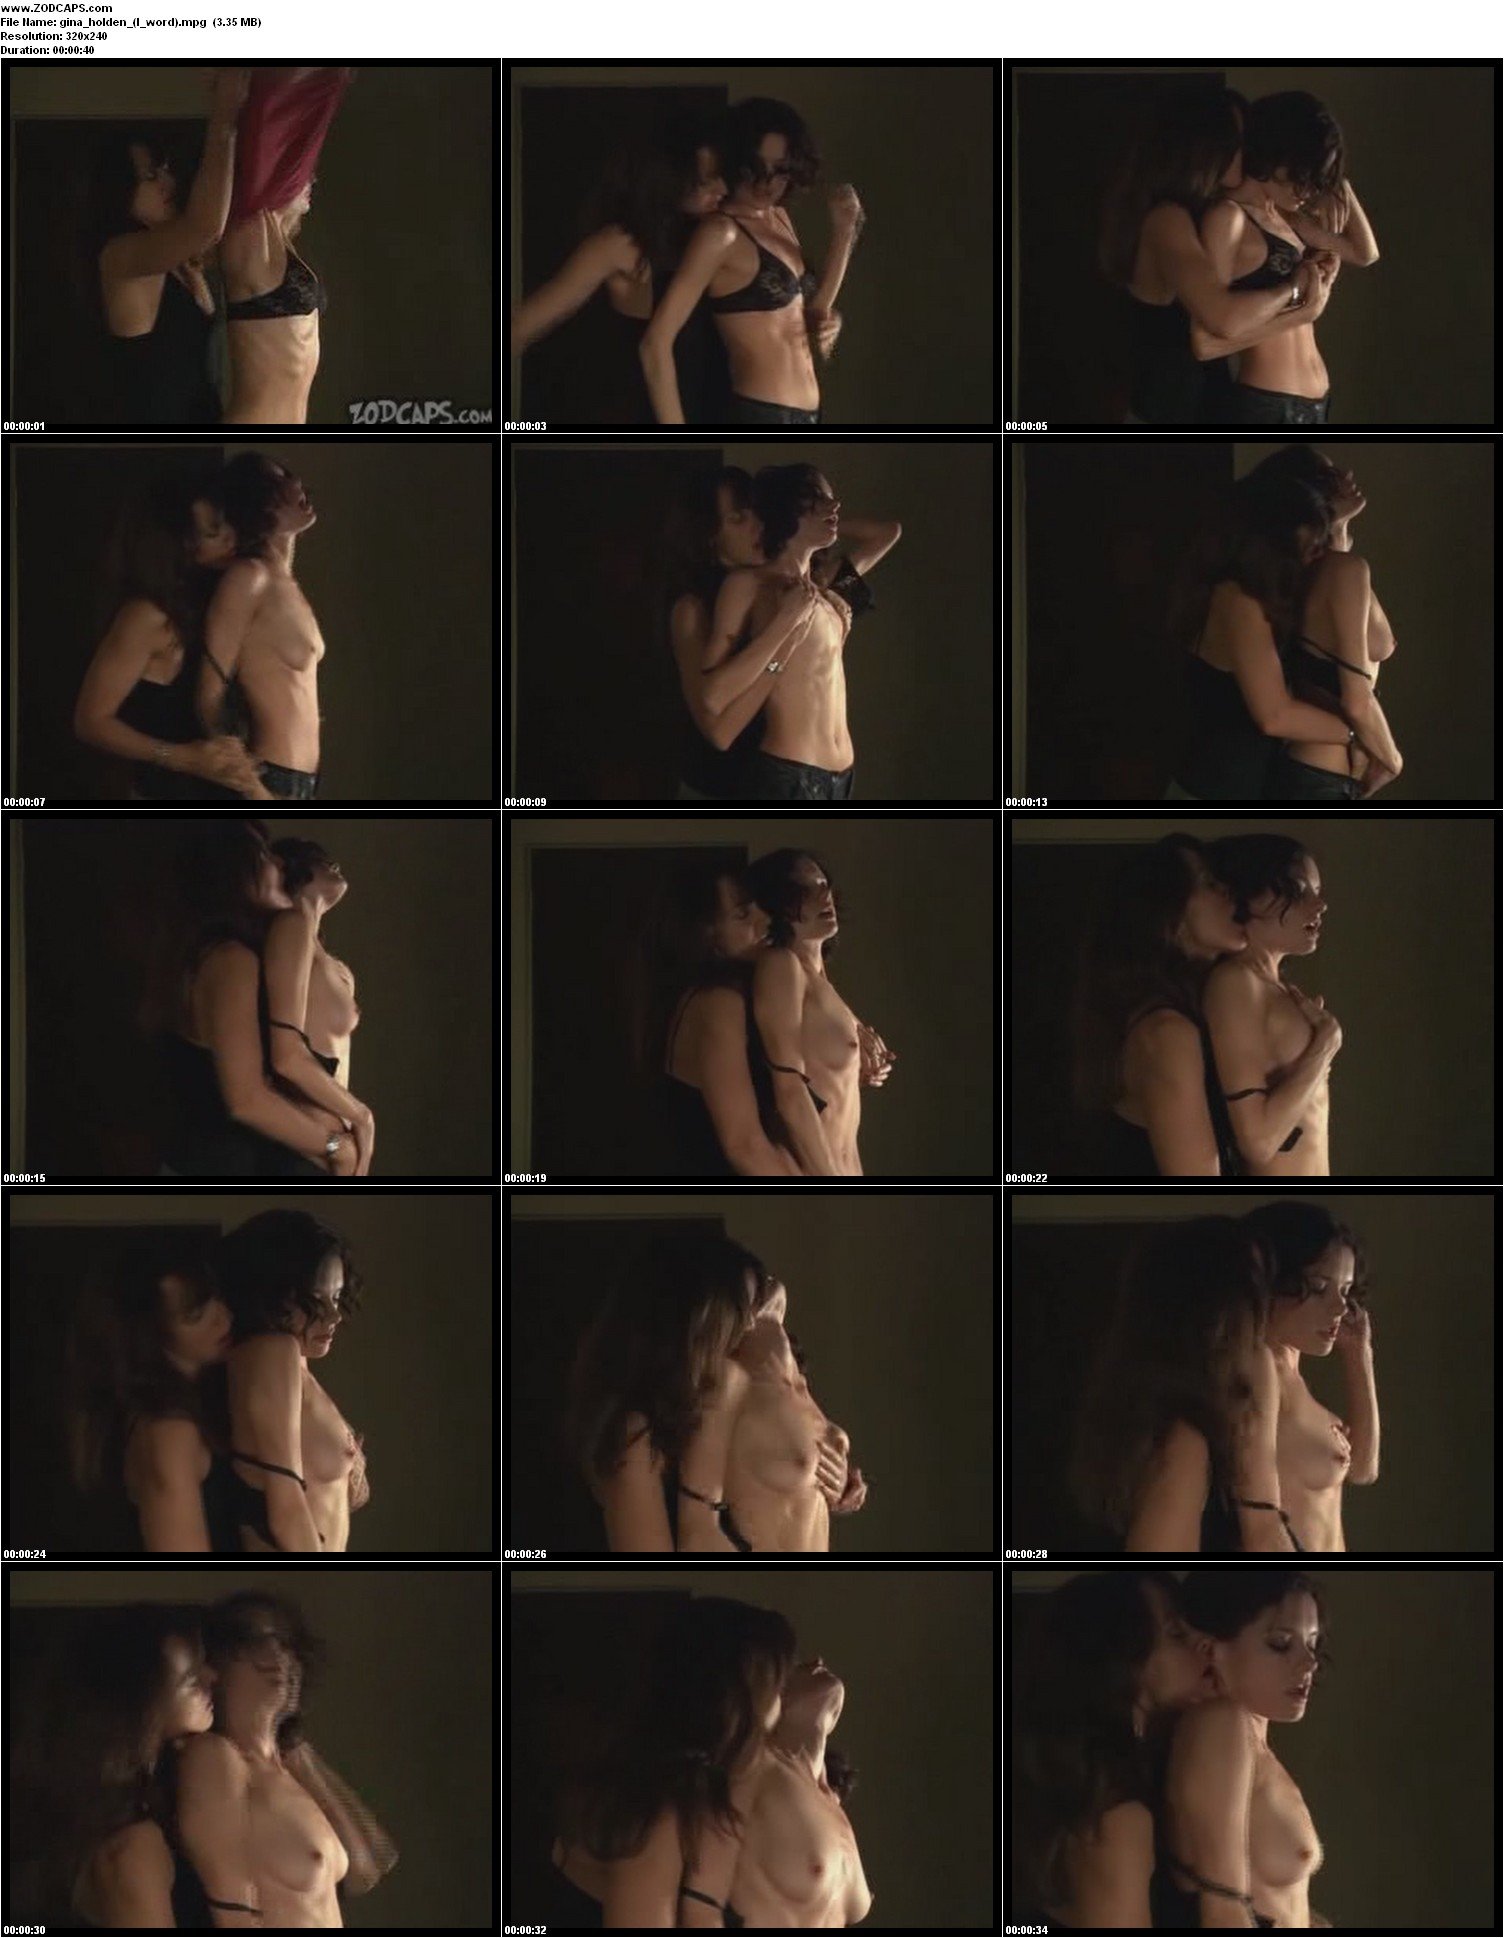 Gina Holden nude pics.